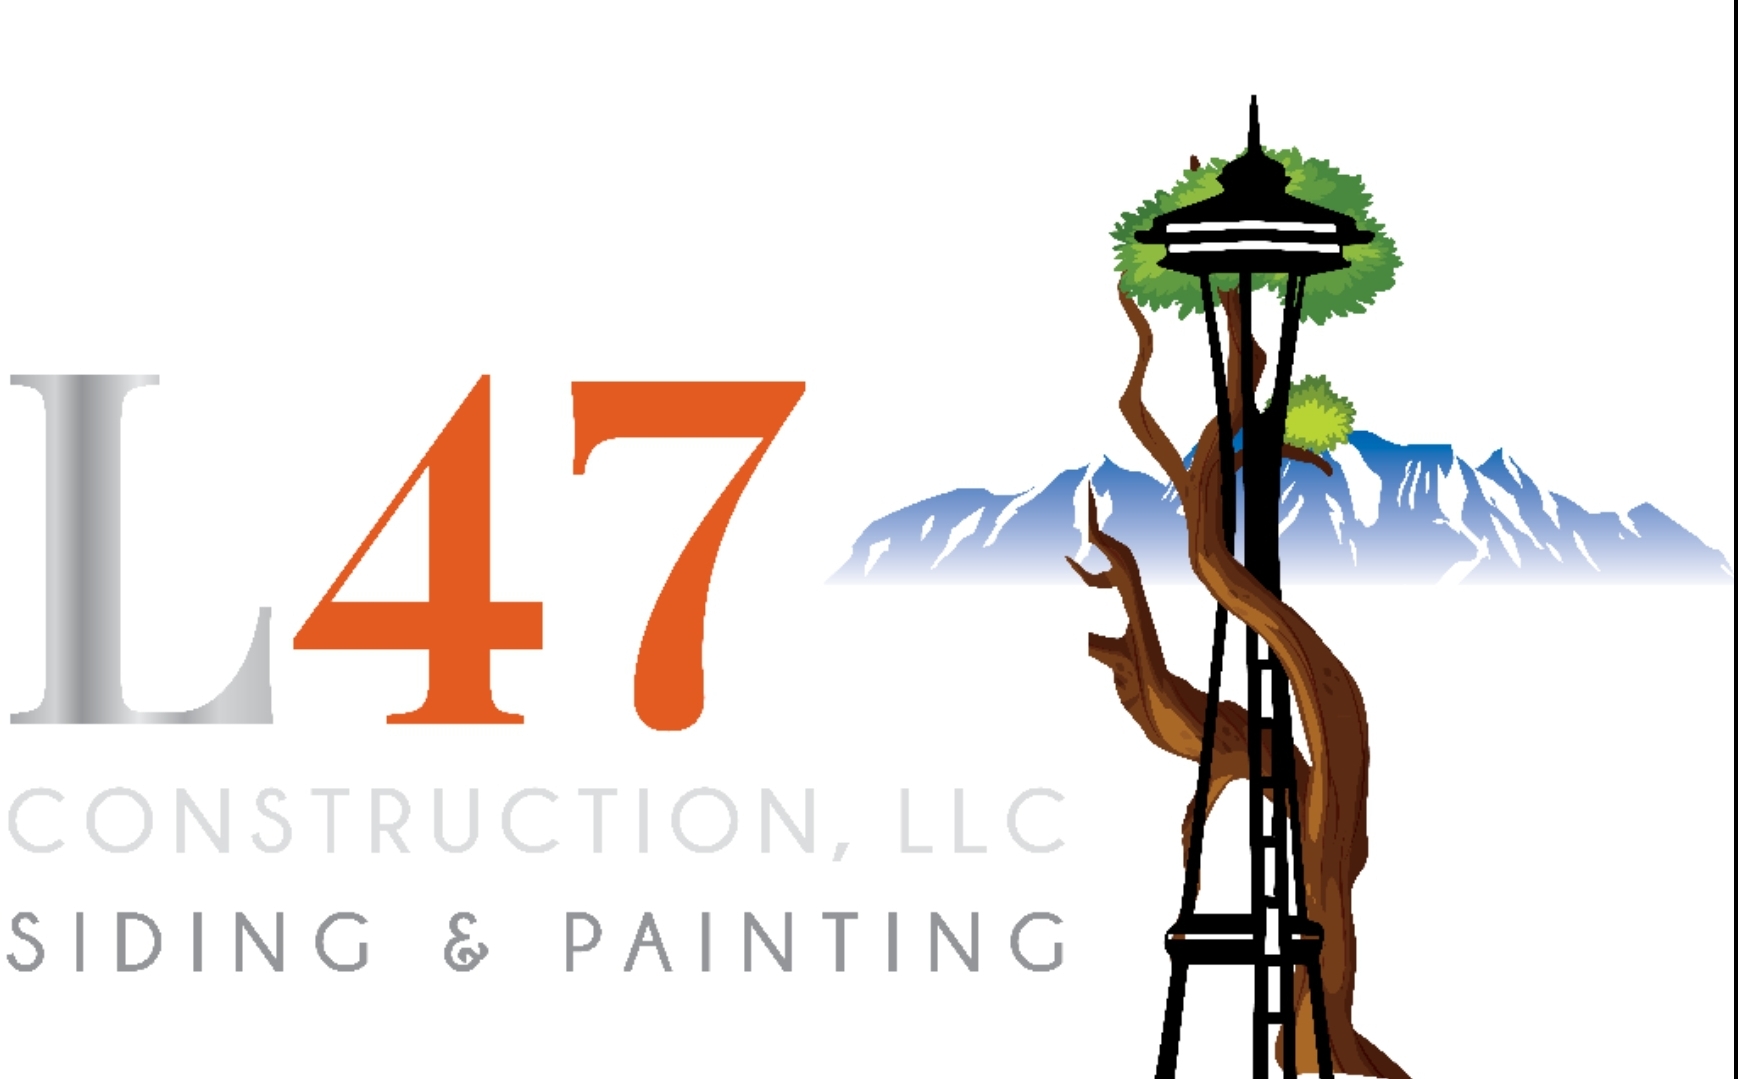 L47 CONSTRUCTION LLC Logo